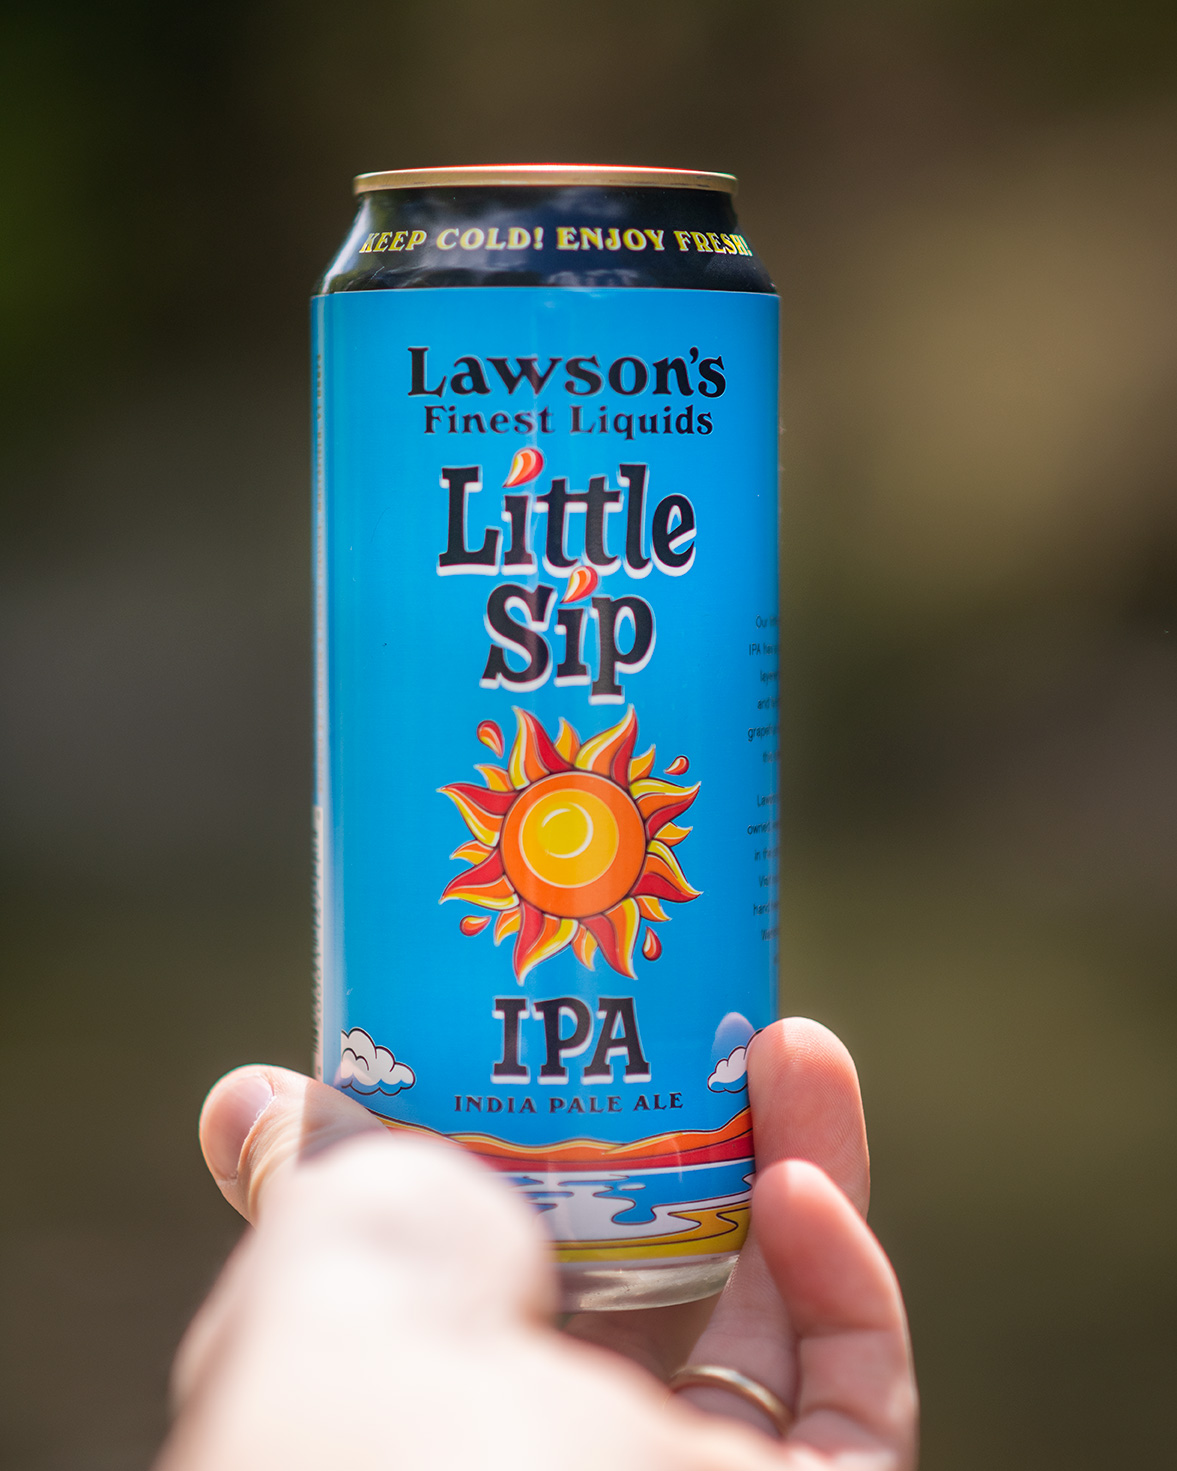 History - Lawson's Finest Liquids